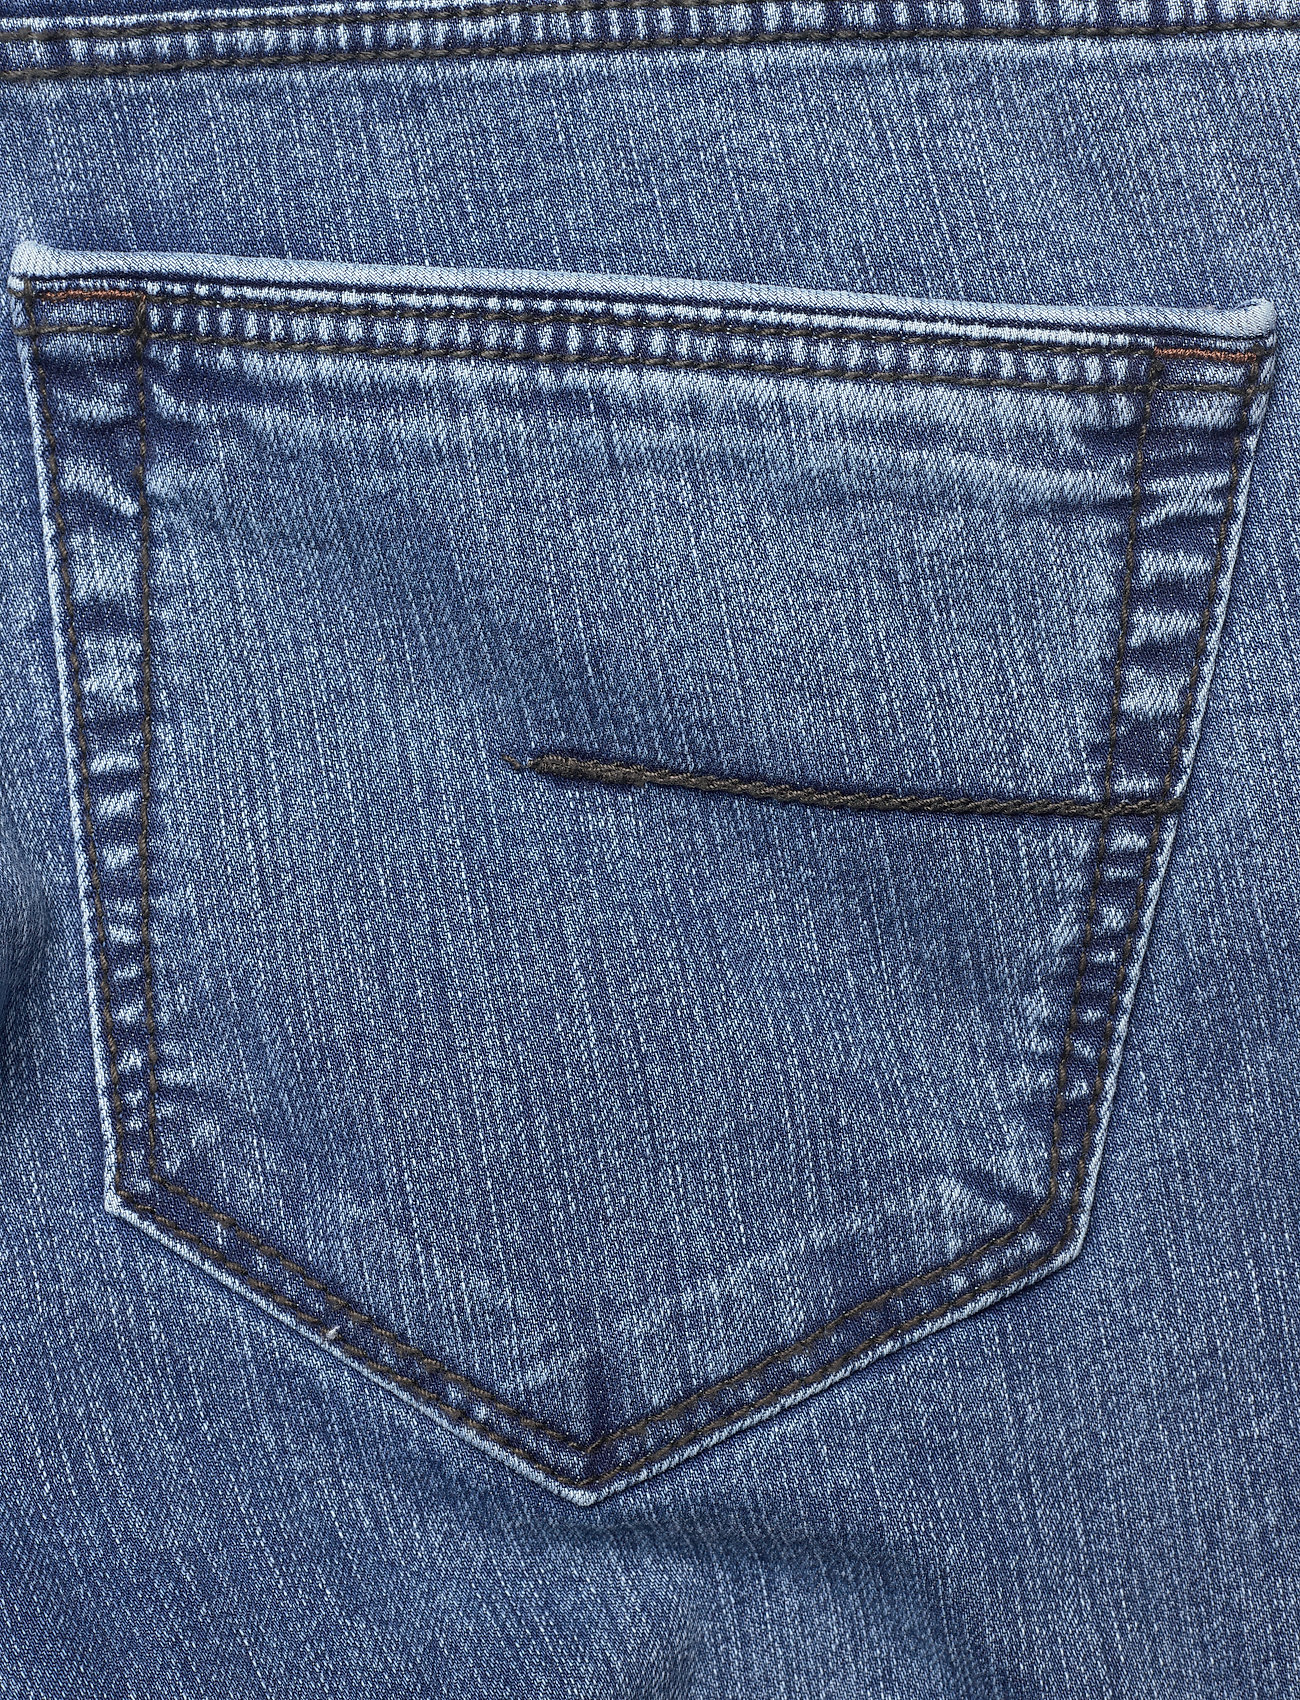 SAND - S Stretch H - Burton NS 32" - regular jeans - pattern - 4